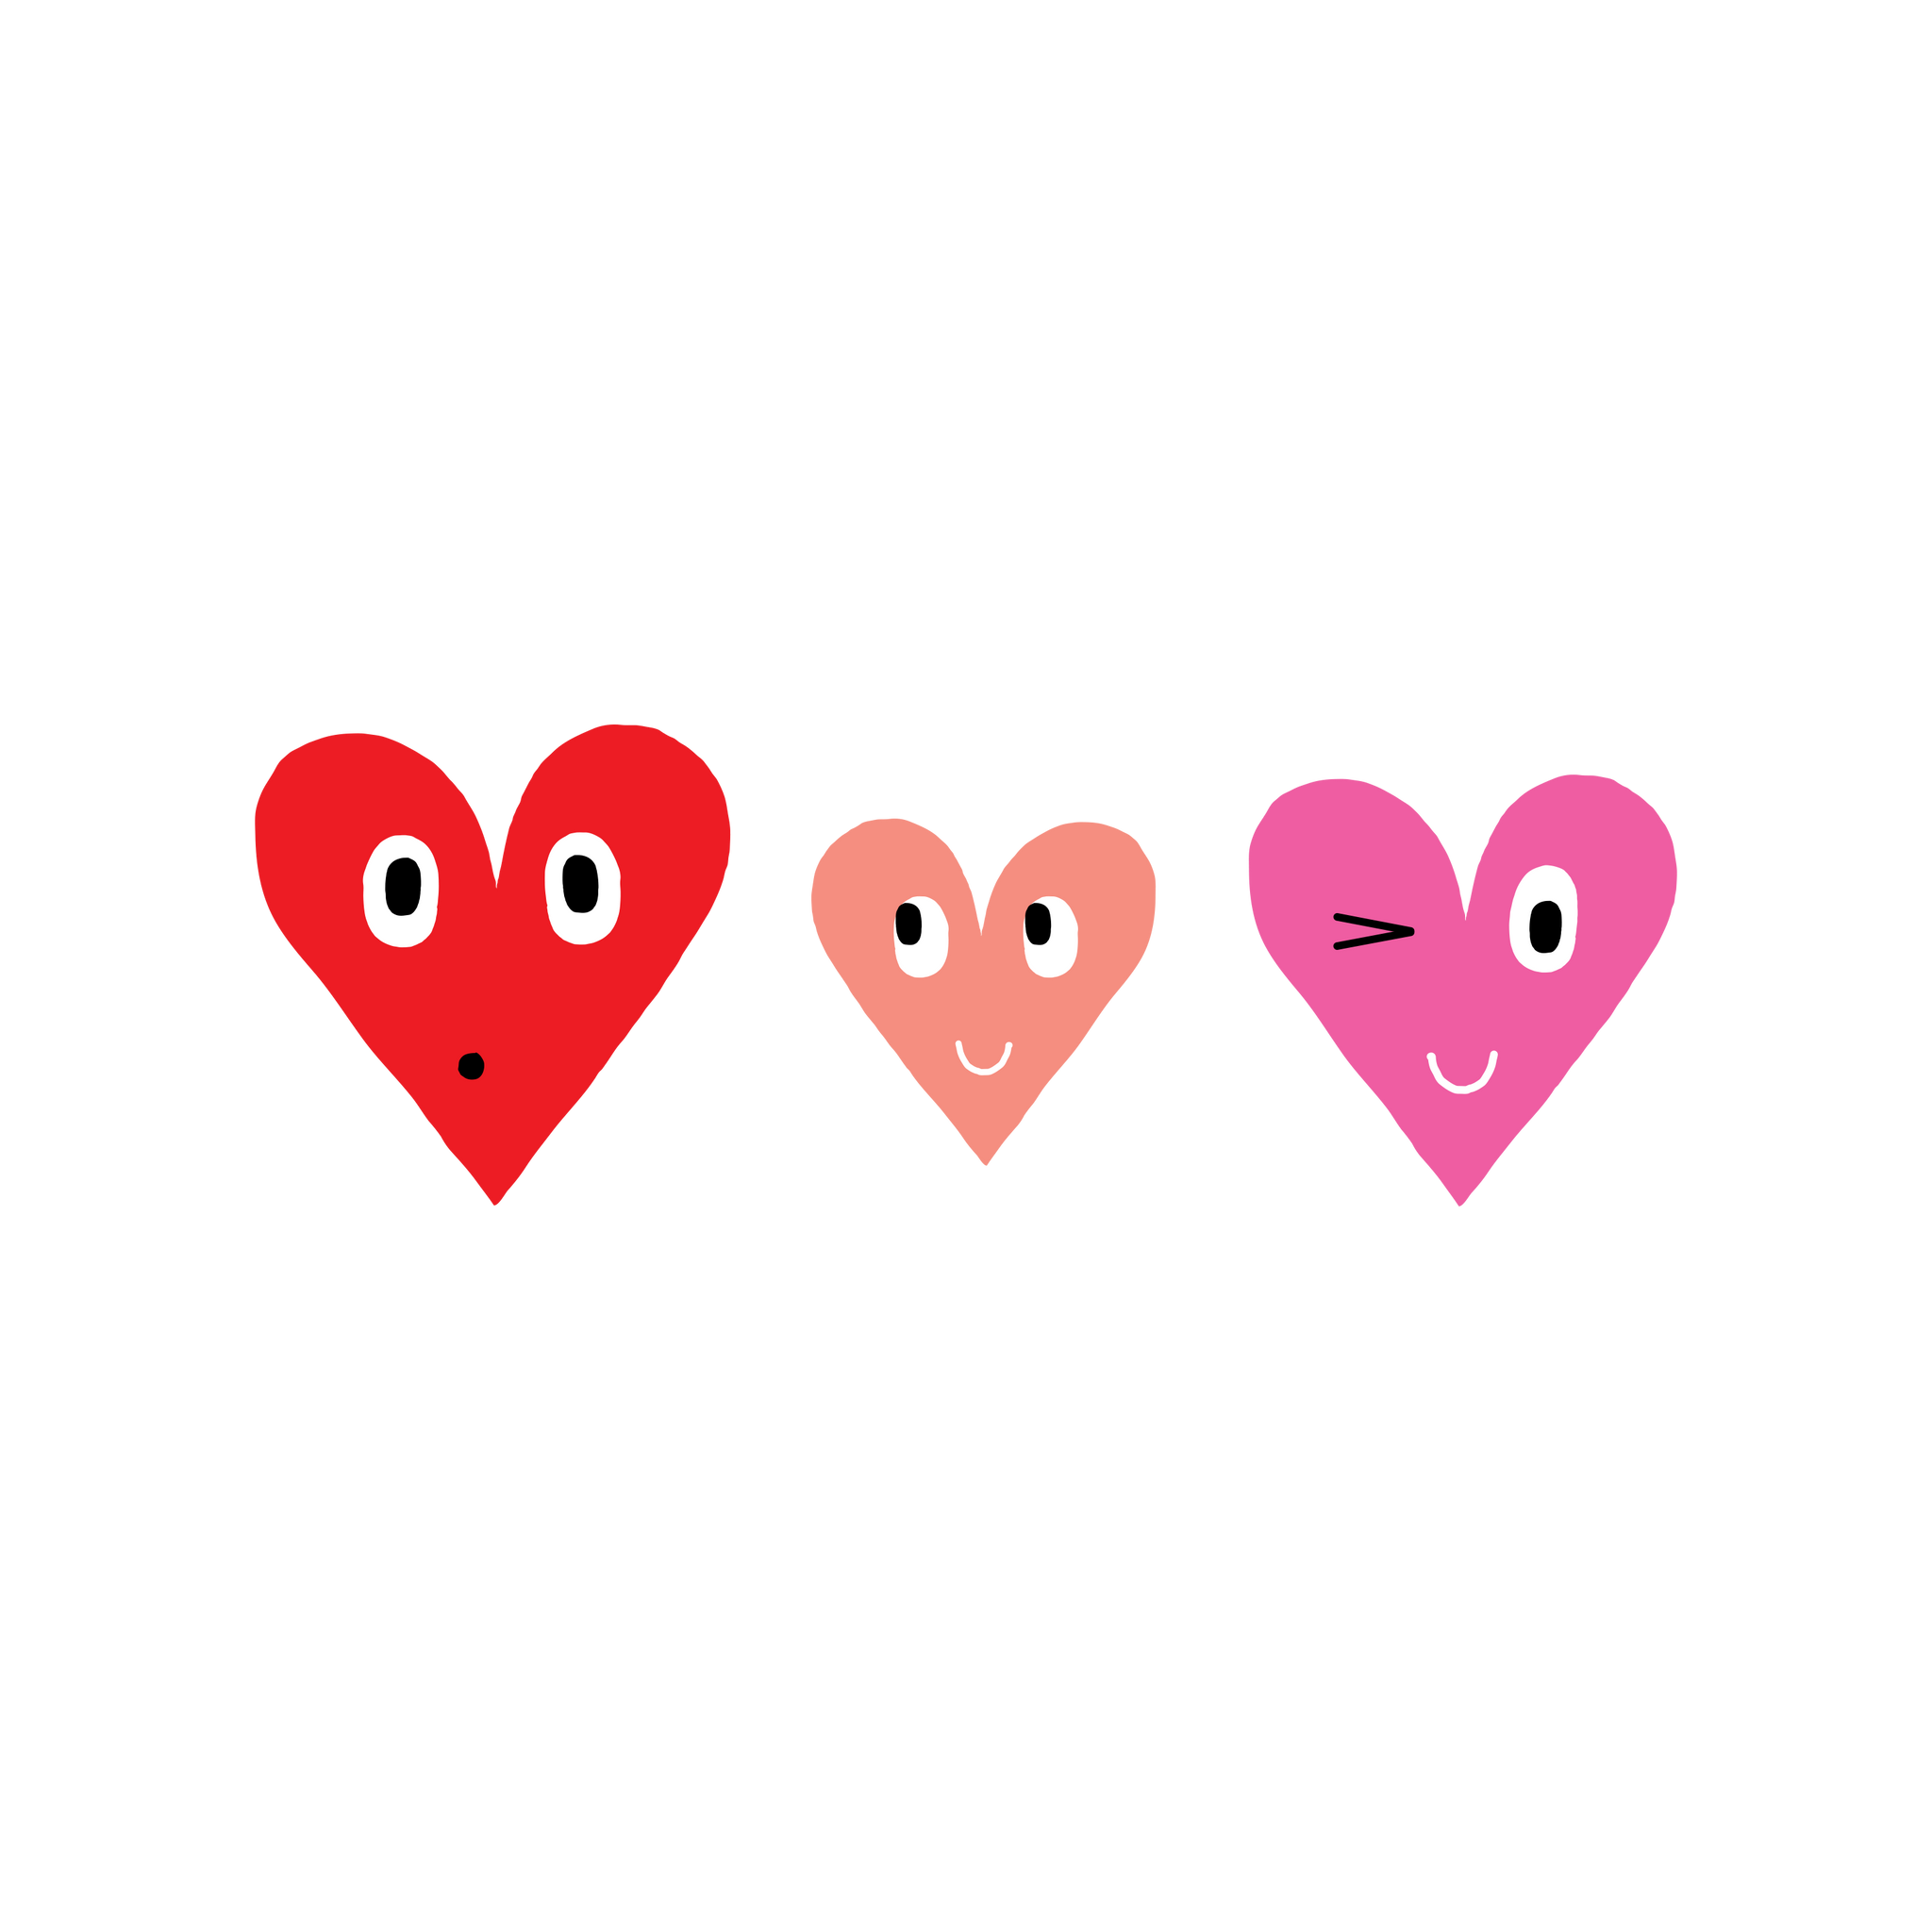 three hearts design by primitiveart on DeviantArt